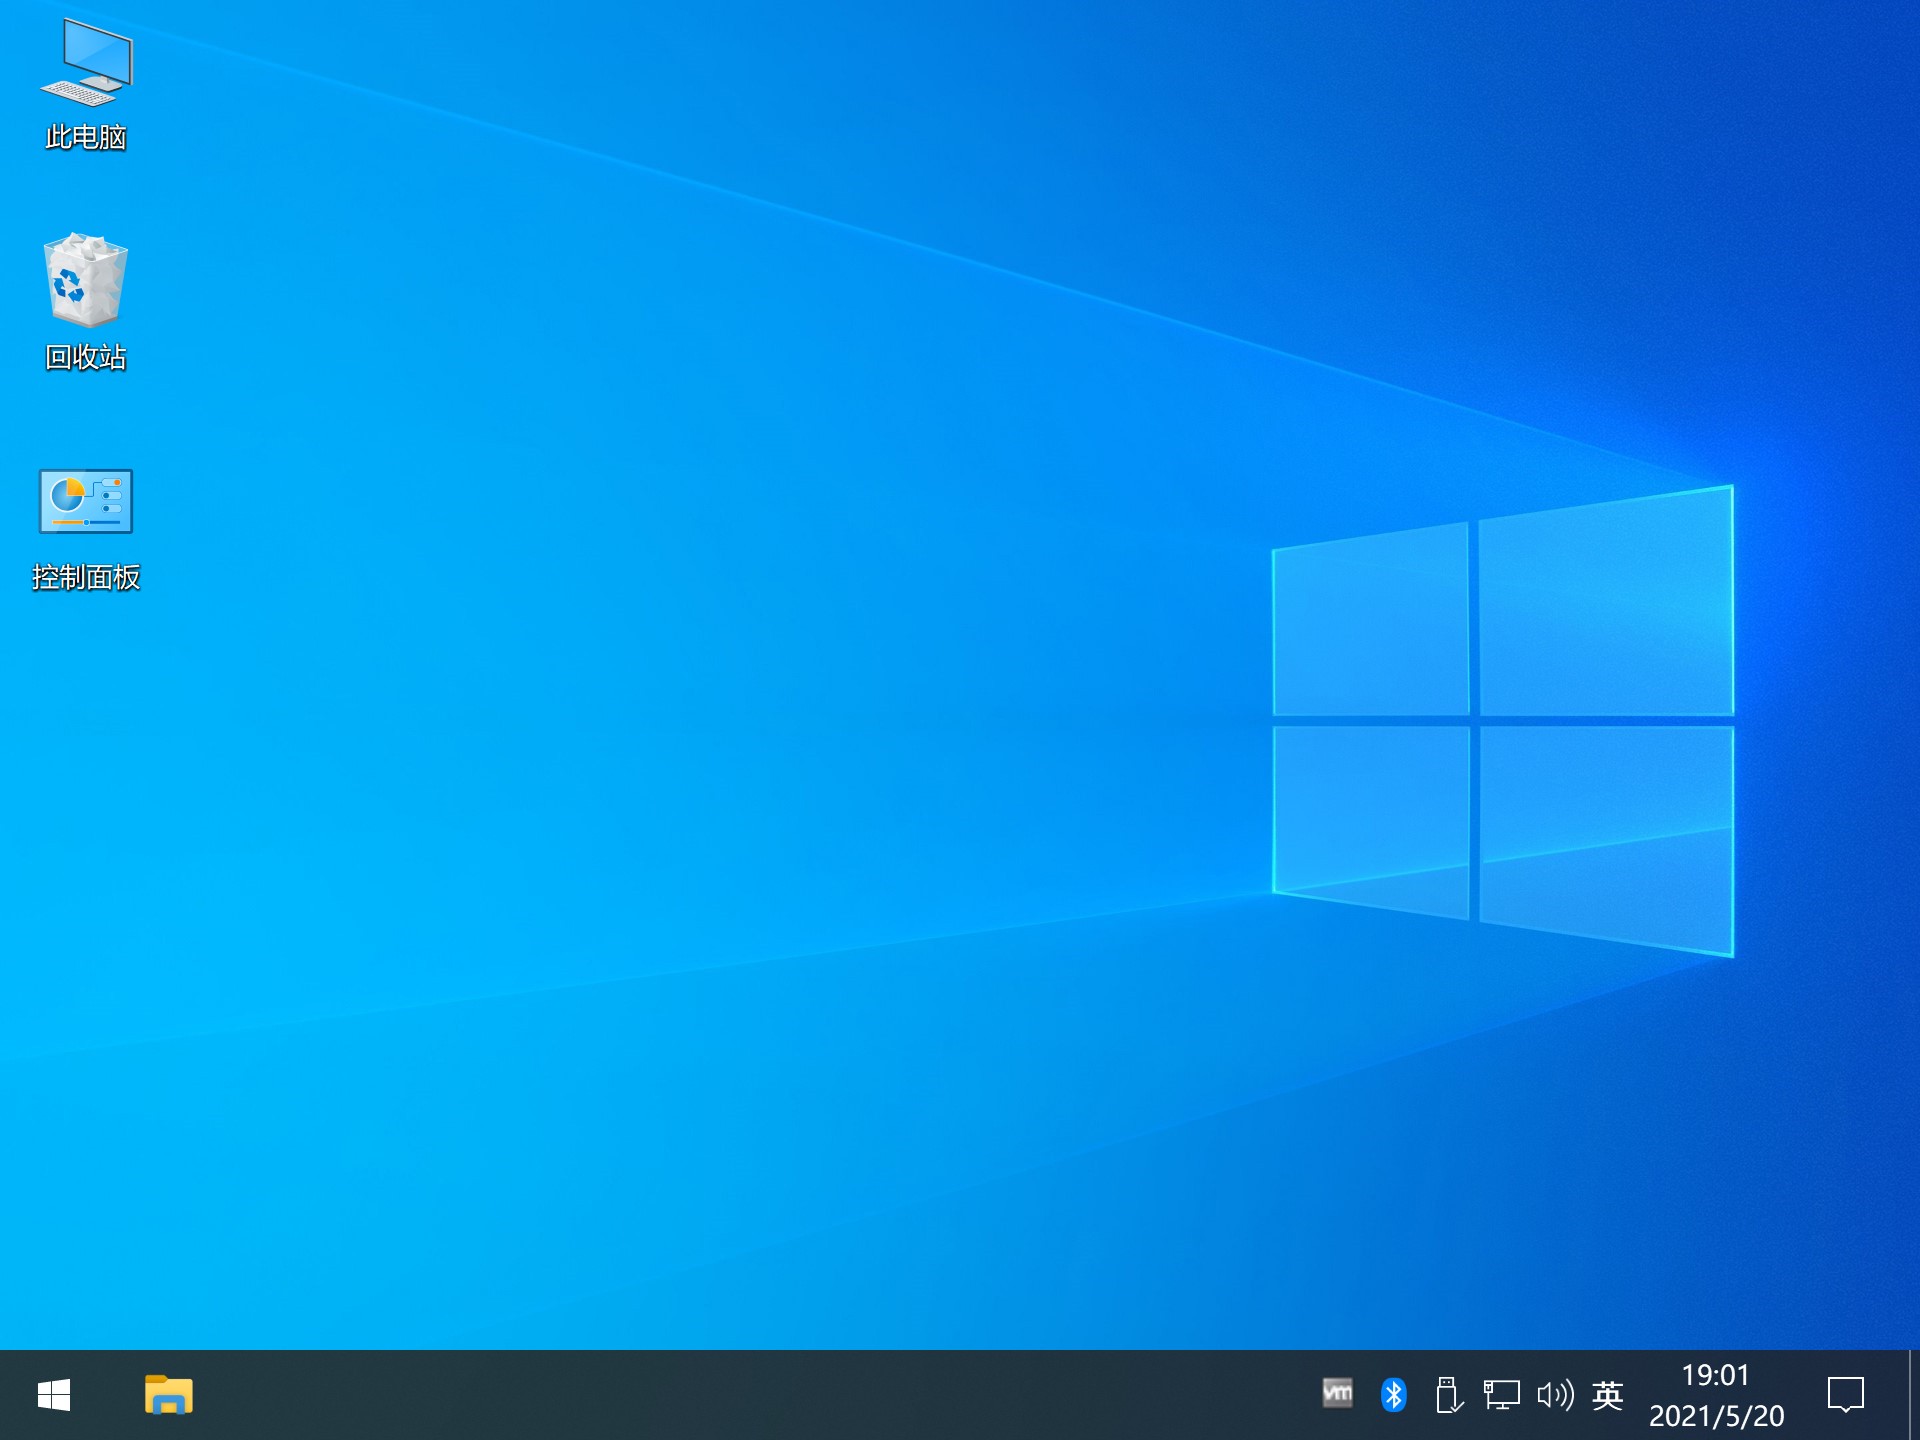 Windows 10 22H2 Build 19045.2604 RTM